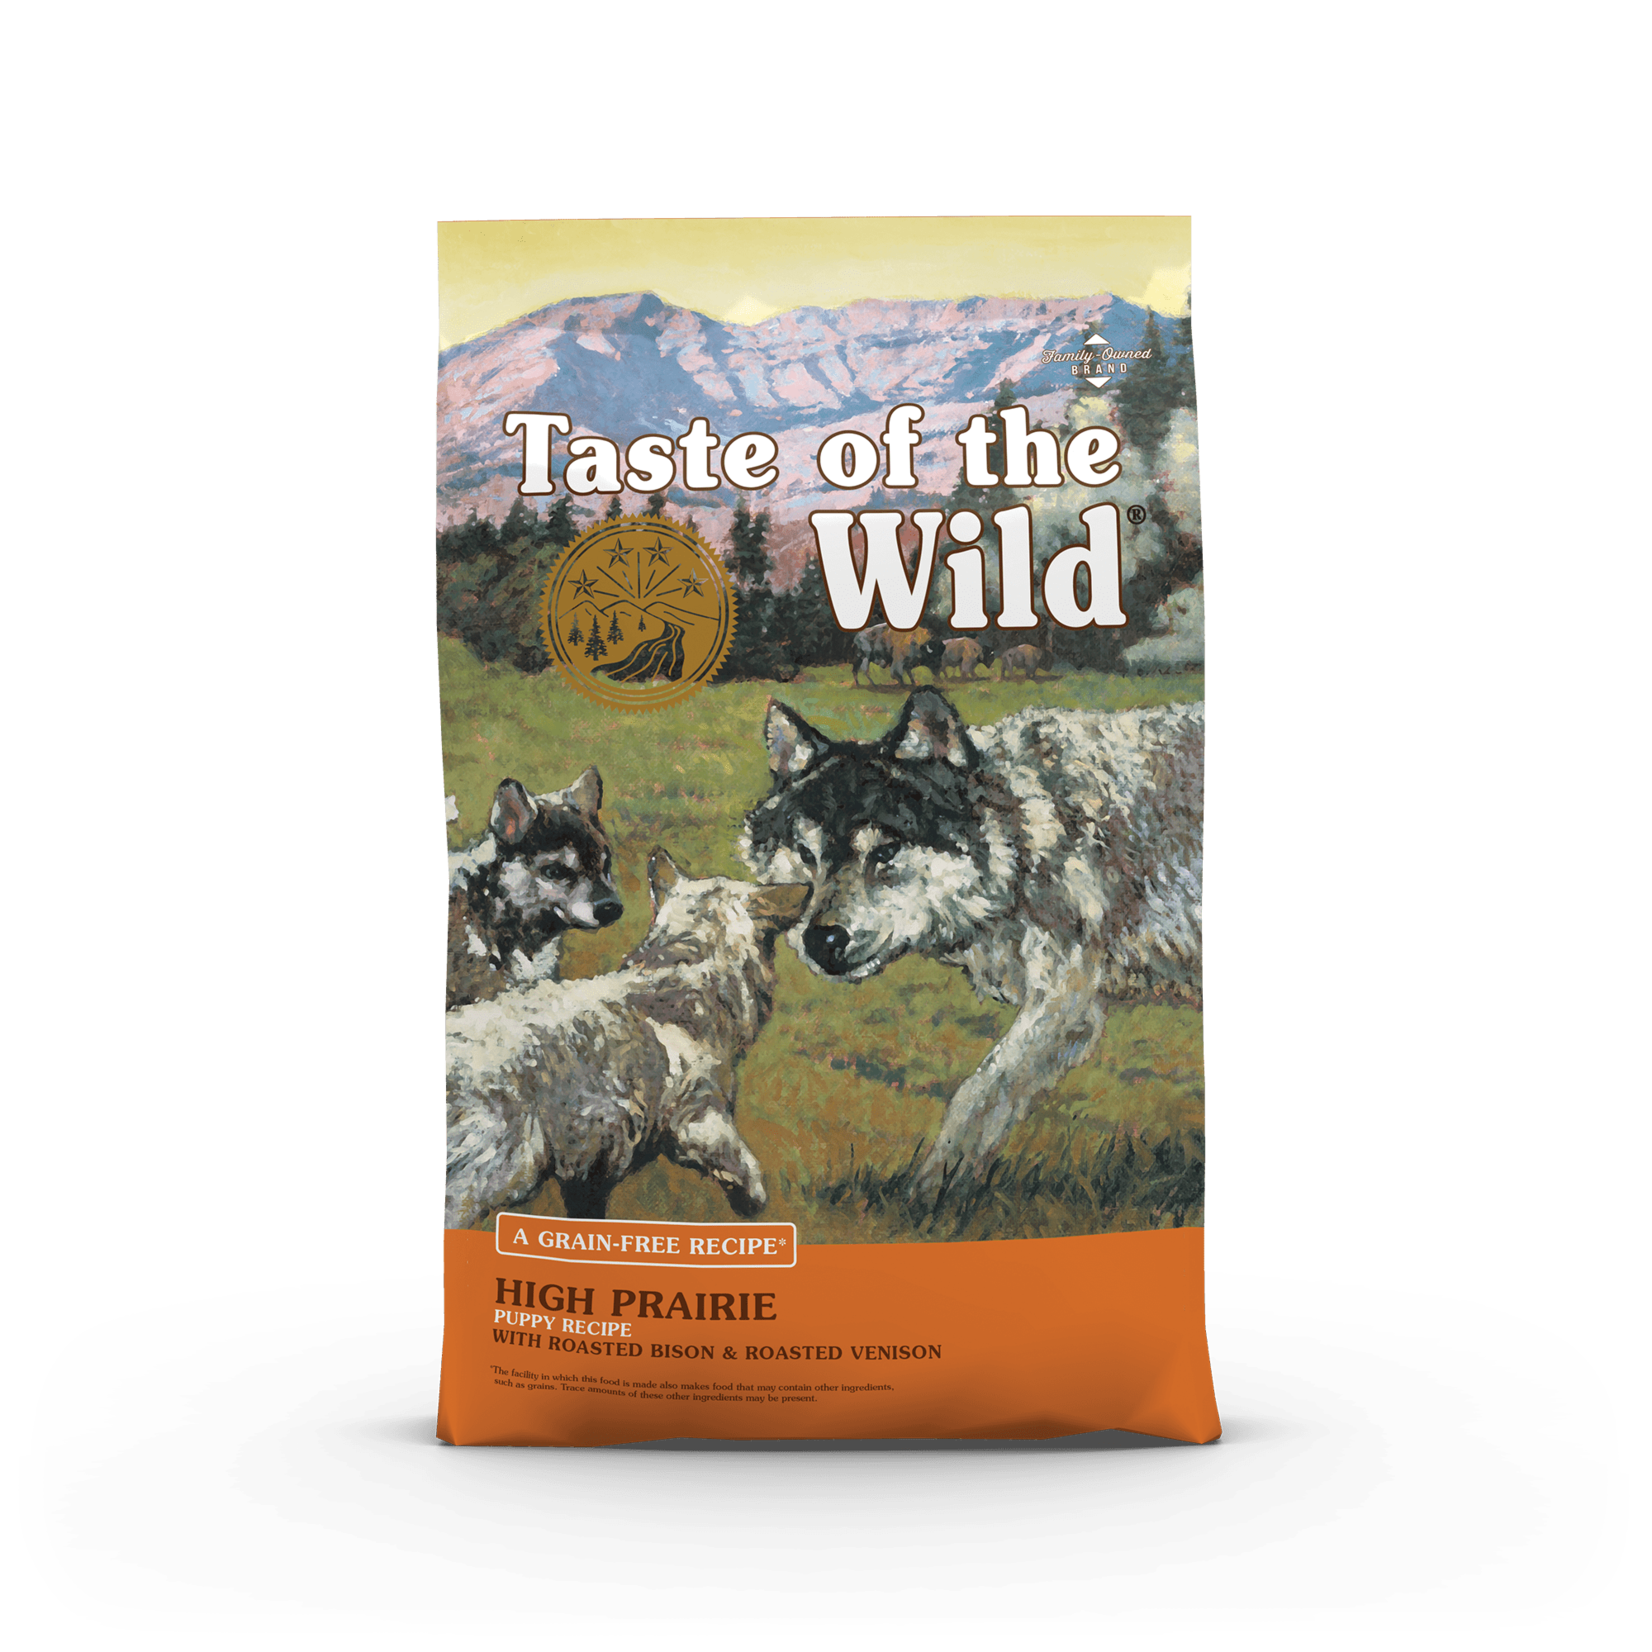 Taste of the Wild Taste of the Wild Dry Dog Food High Prairie Puppy Recipe with Roasted Bison & Venison Grain Free